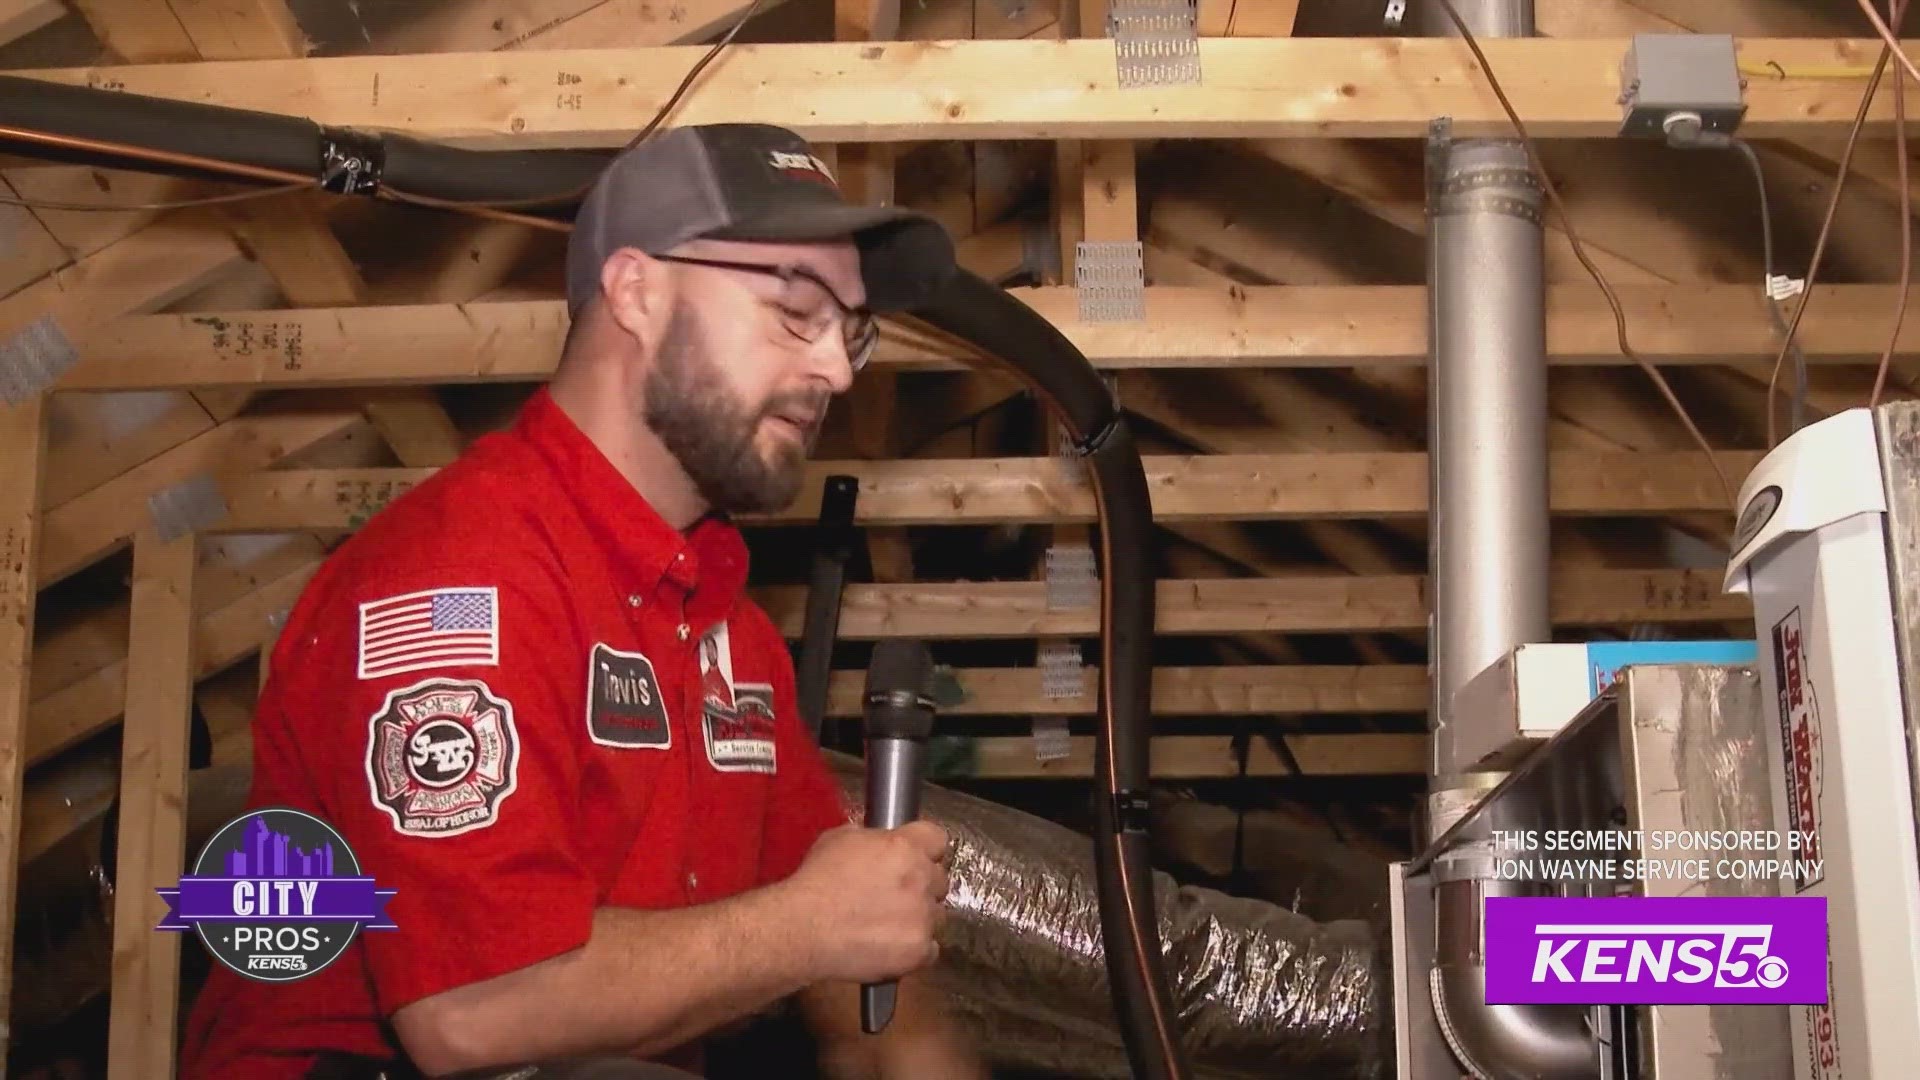 Installing a quality home air system. Sponsored by: Jon Wayne Service Company